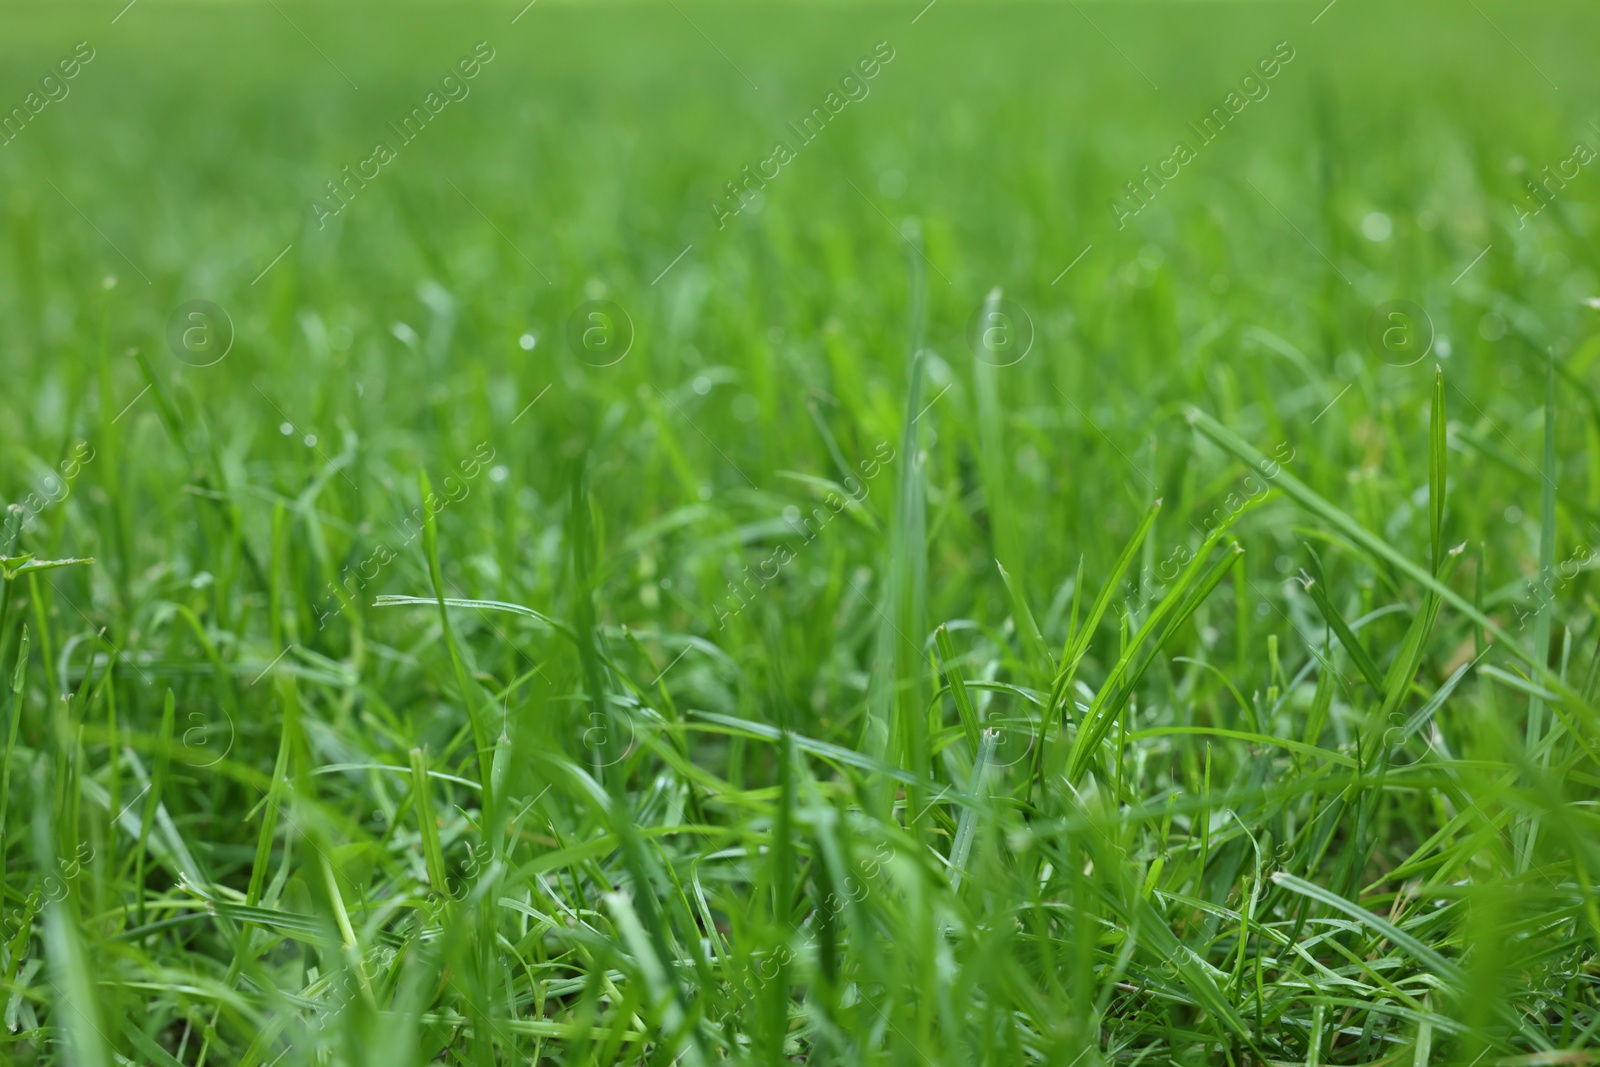 Photo of Fresh green grass growing outdoors in summer, closeup